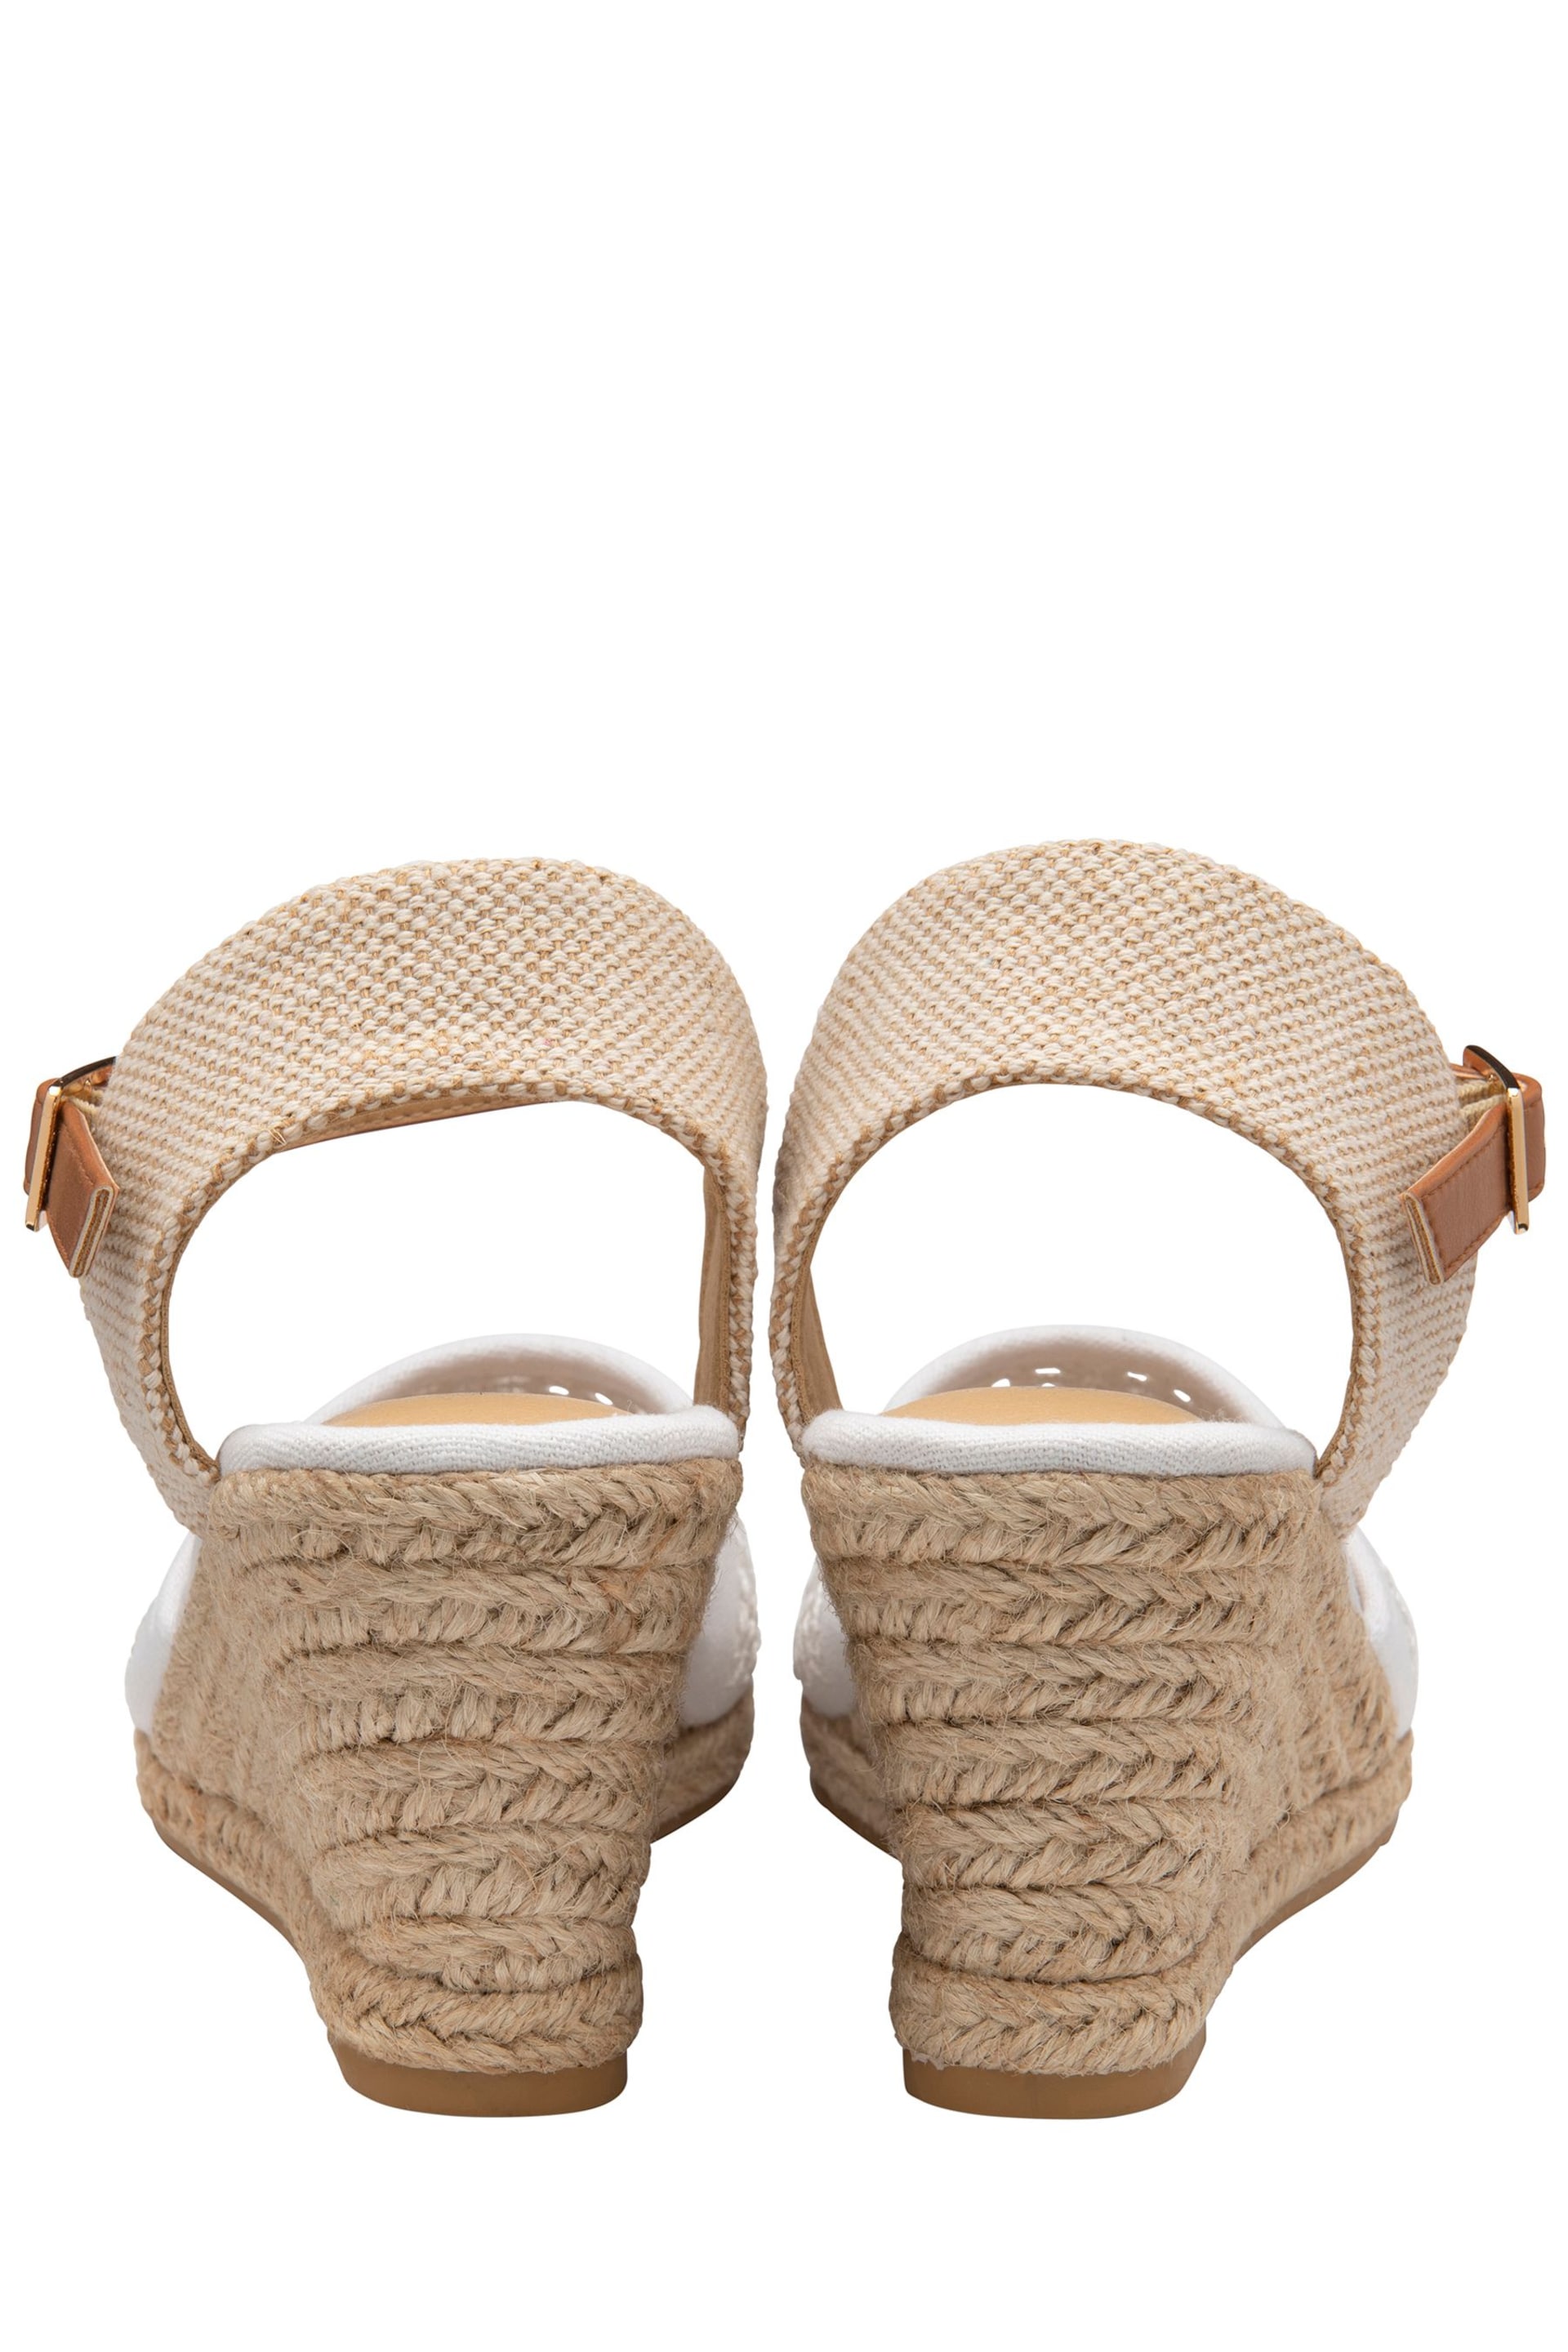 Dunlop White Wedges Espadrilles Sandals - Image 3 of 4